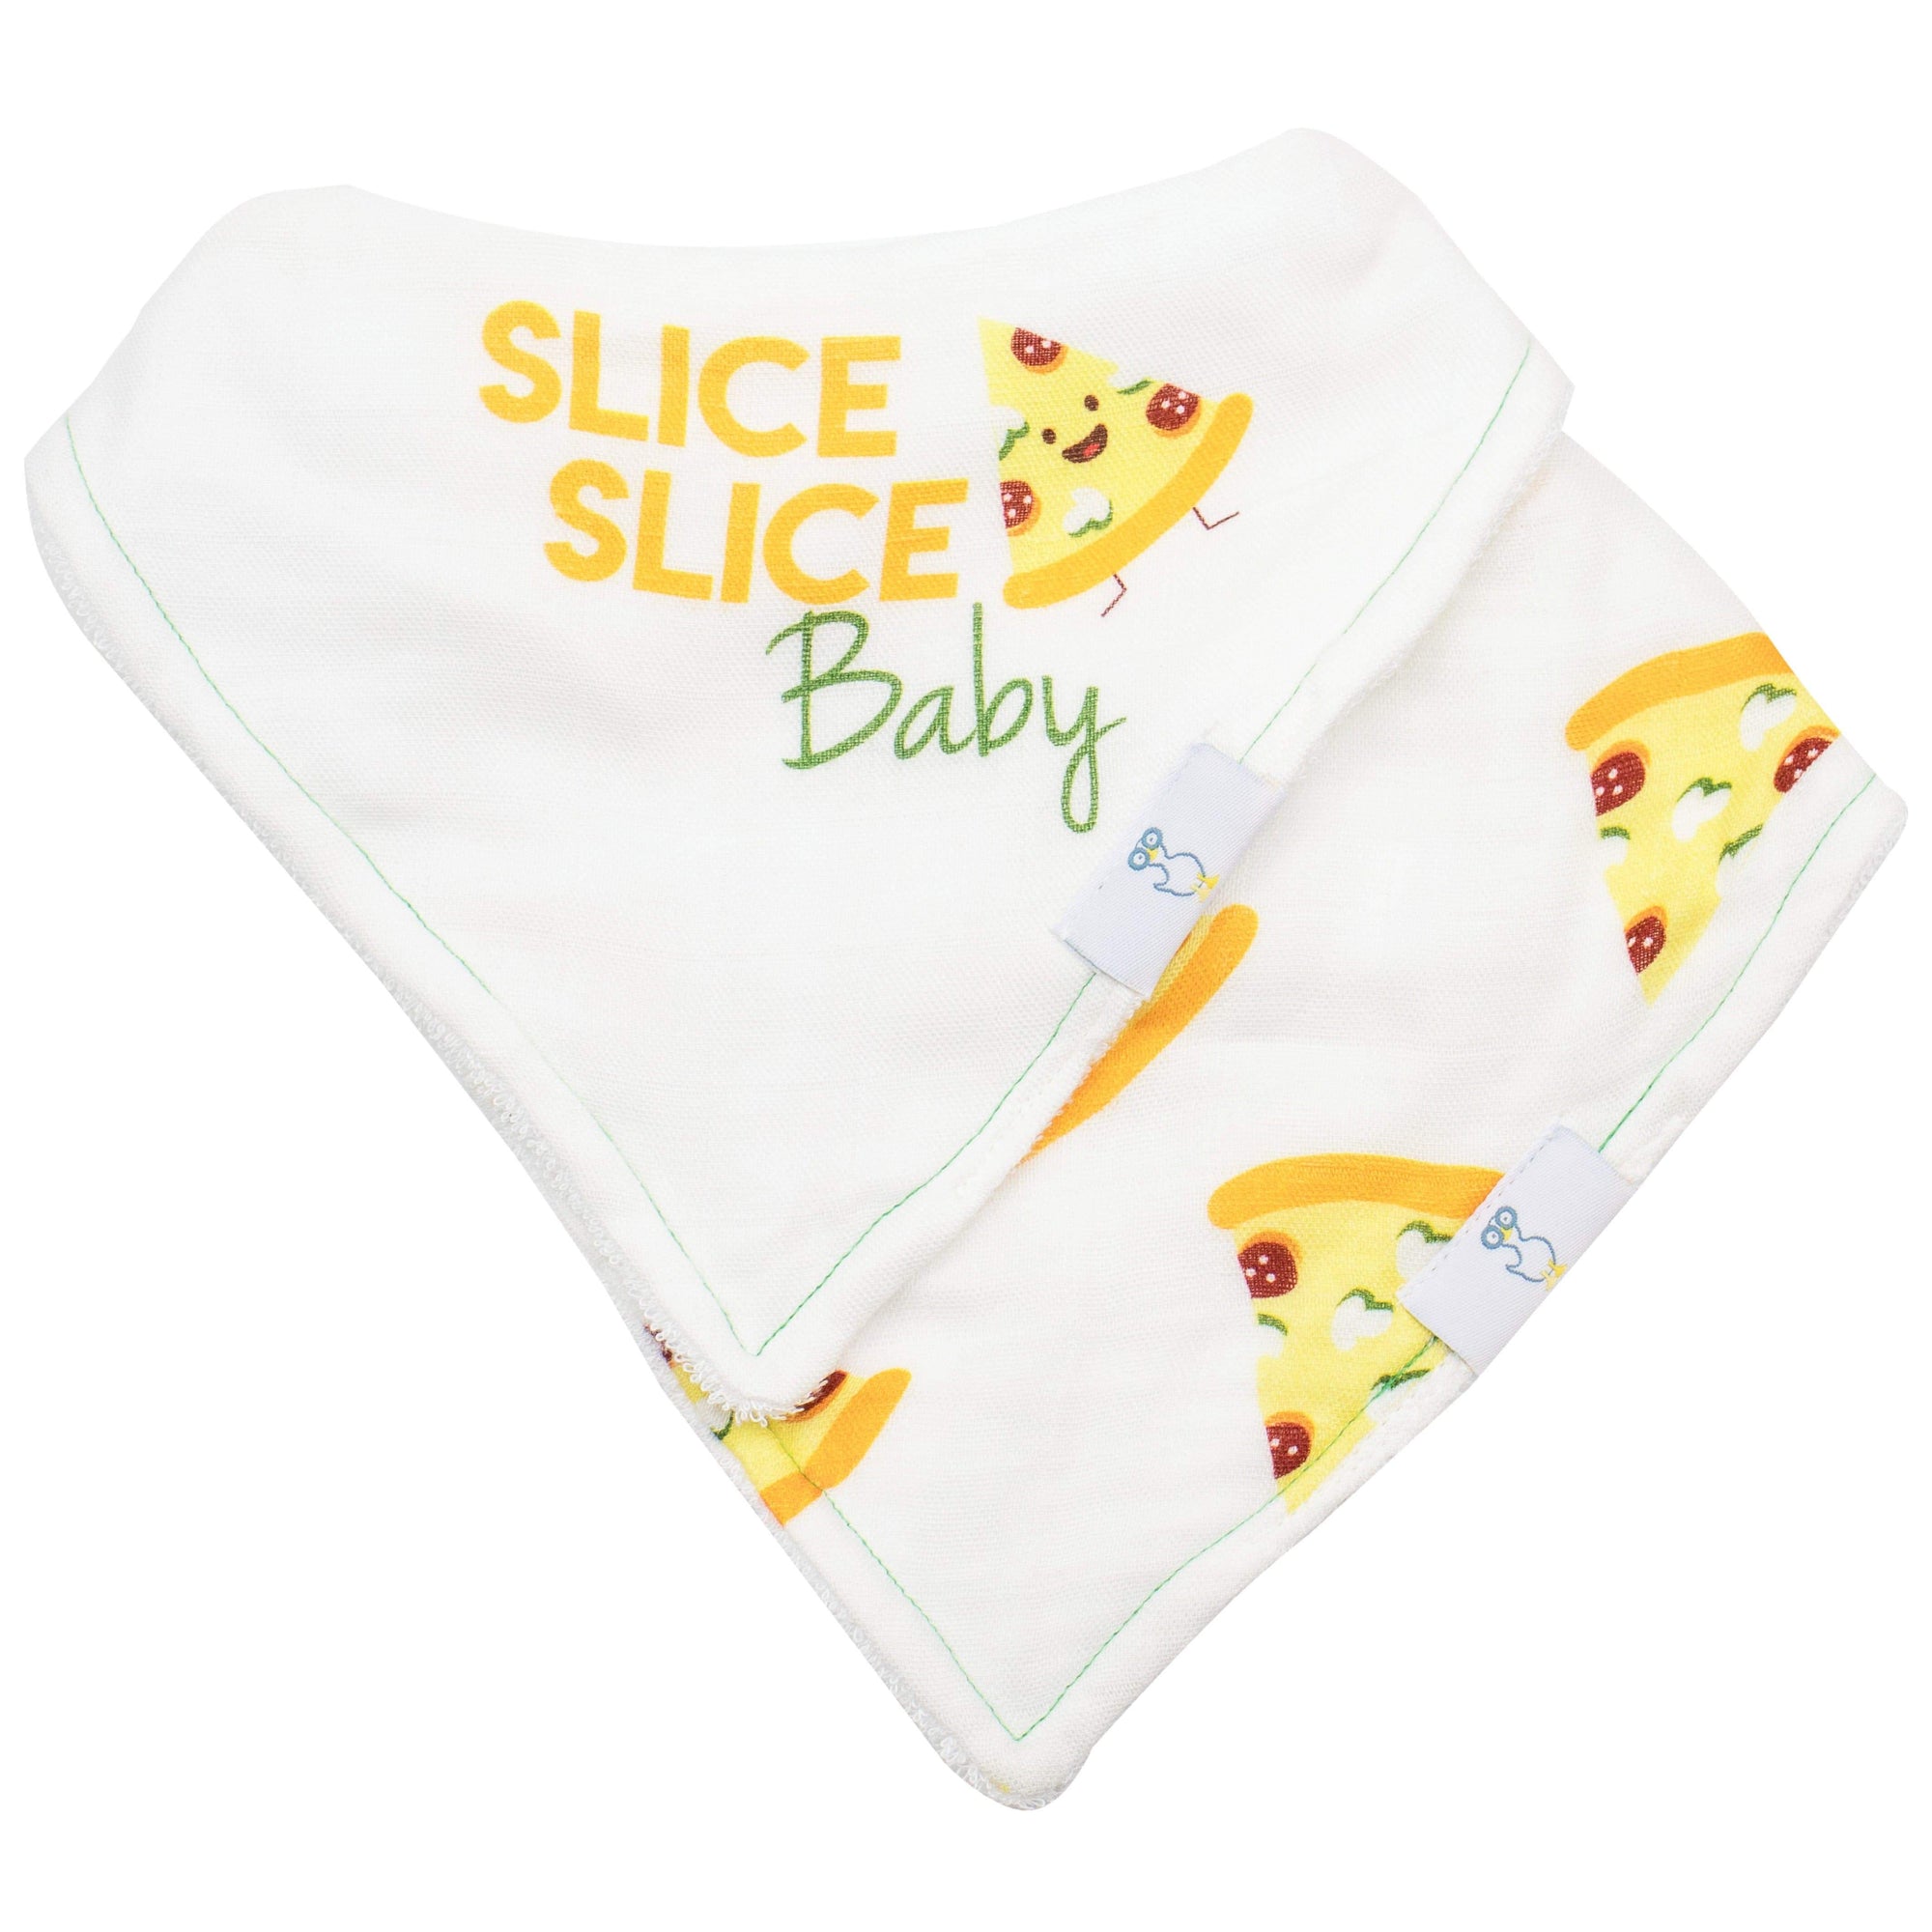 Goosewaddle bibs 2 Pack Muslin & Terry Cloth Bib Set Slice Slice Baby